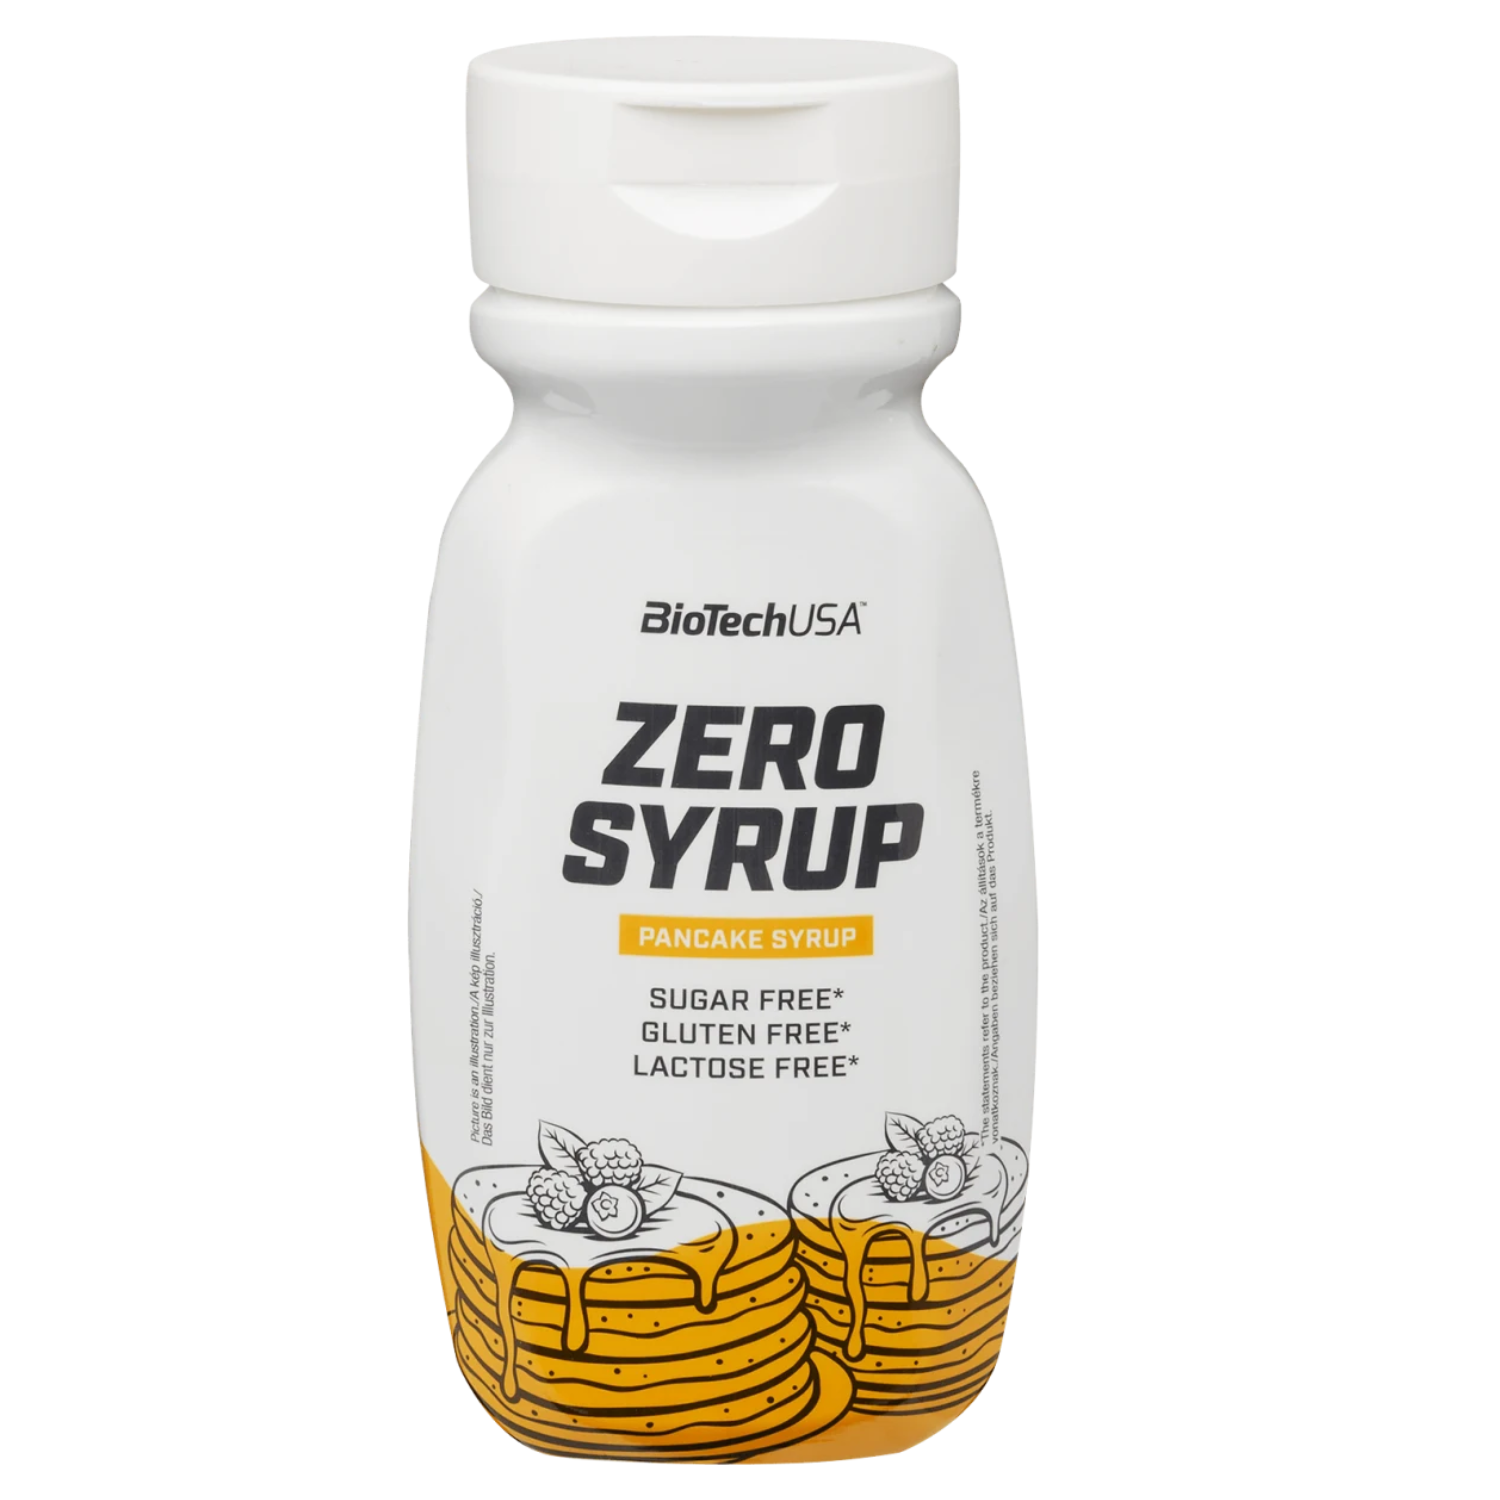 Zero syrup Pancake